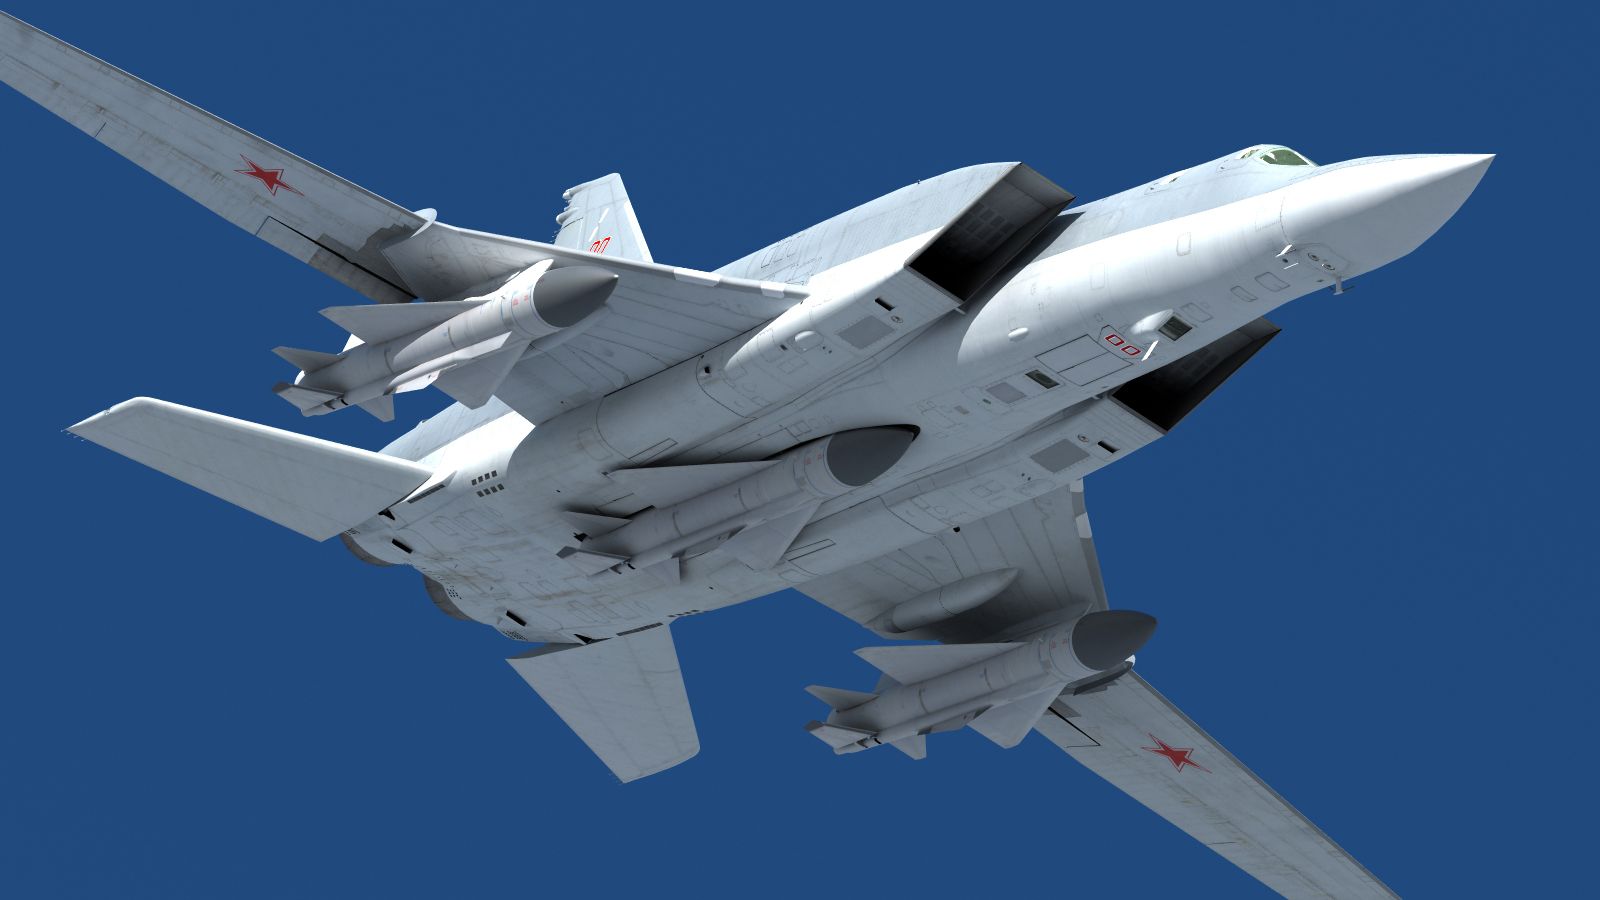 TU-22M-Backfire-with-Kh-22-missiles.jpg